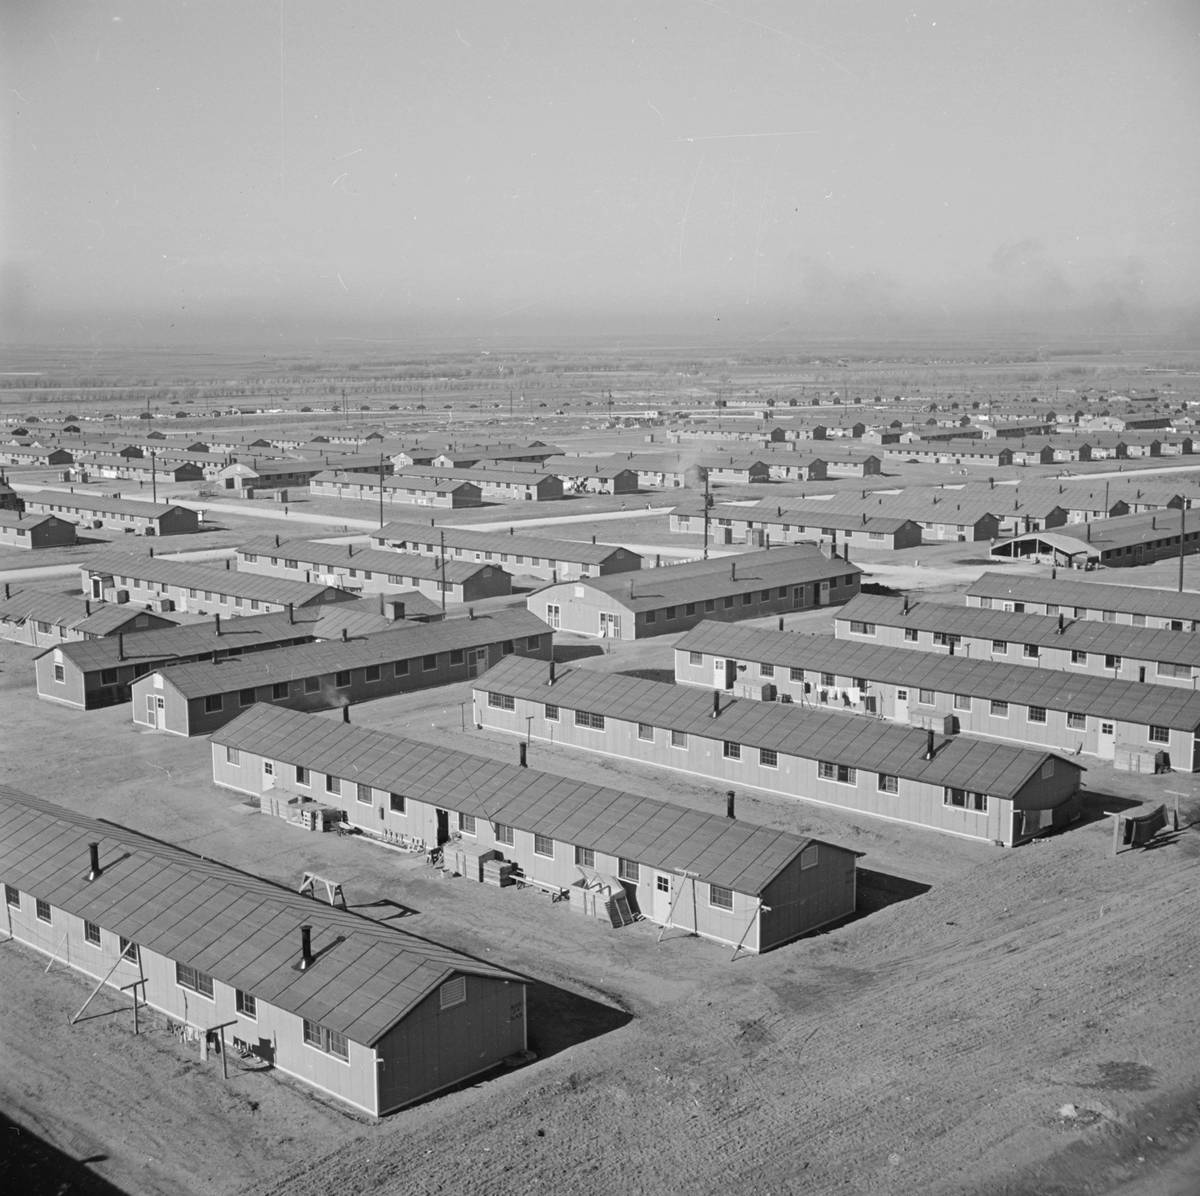 Granada Relocation Center, Amache, Colorado, 1942